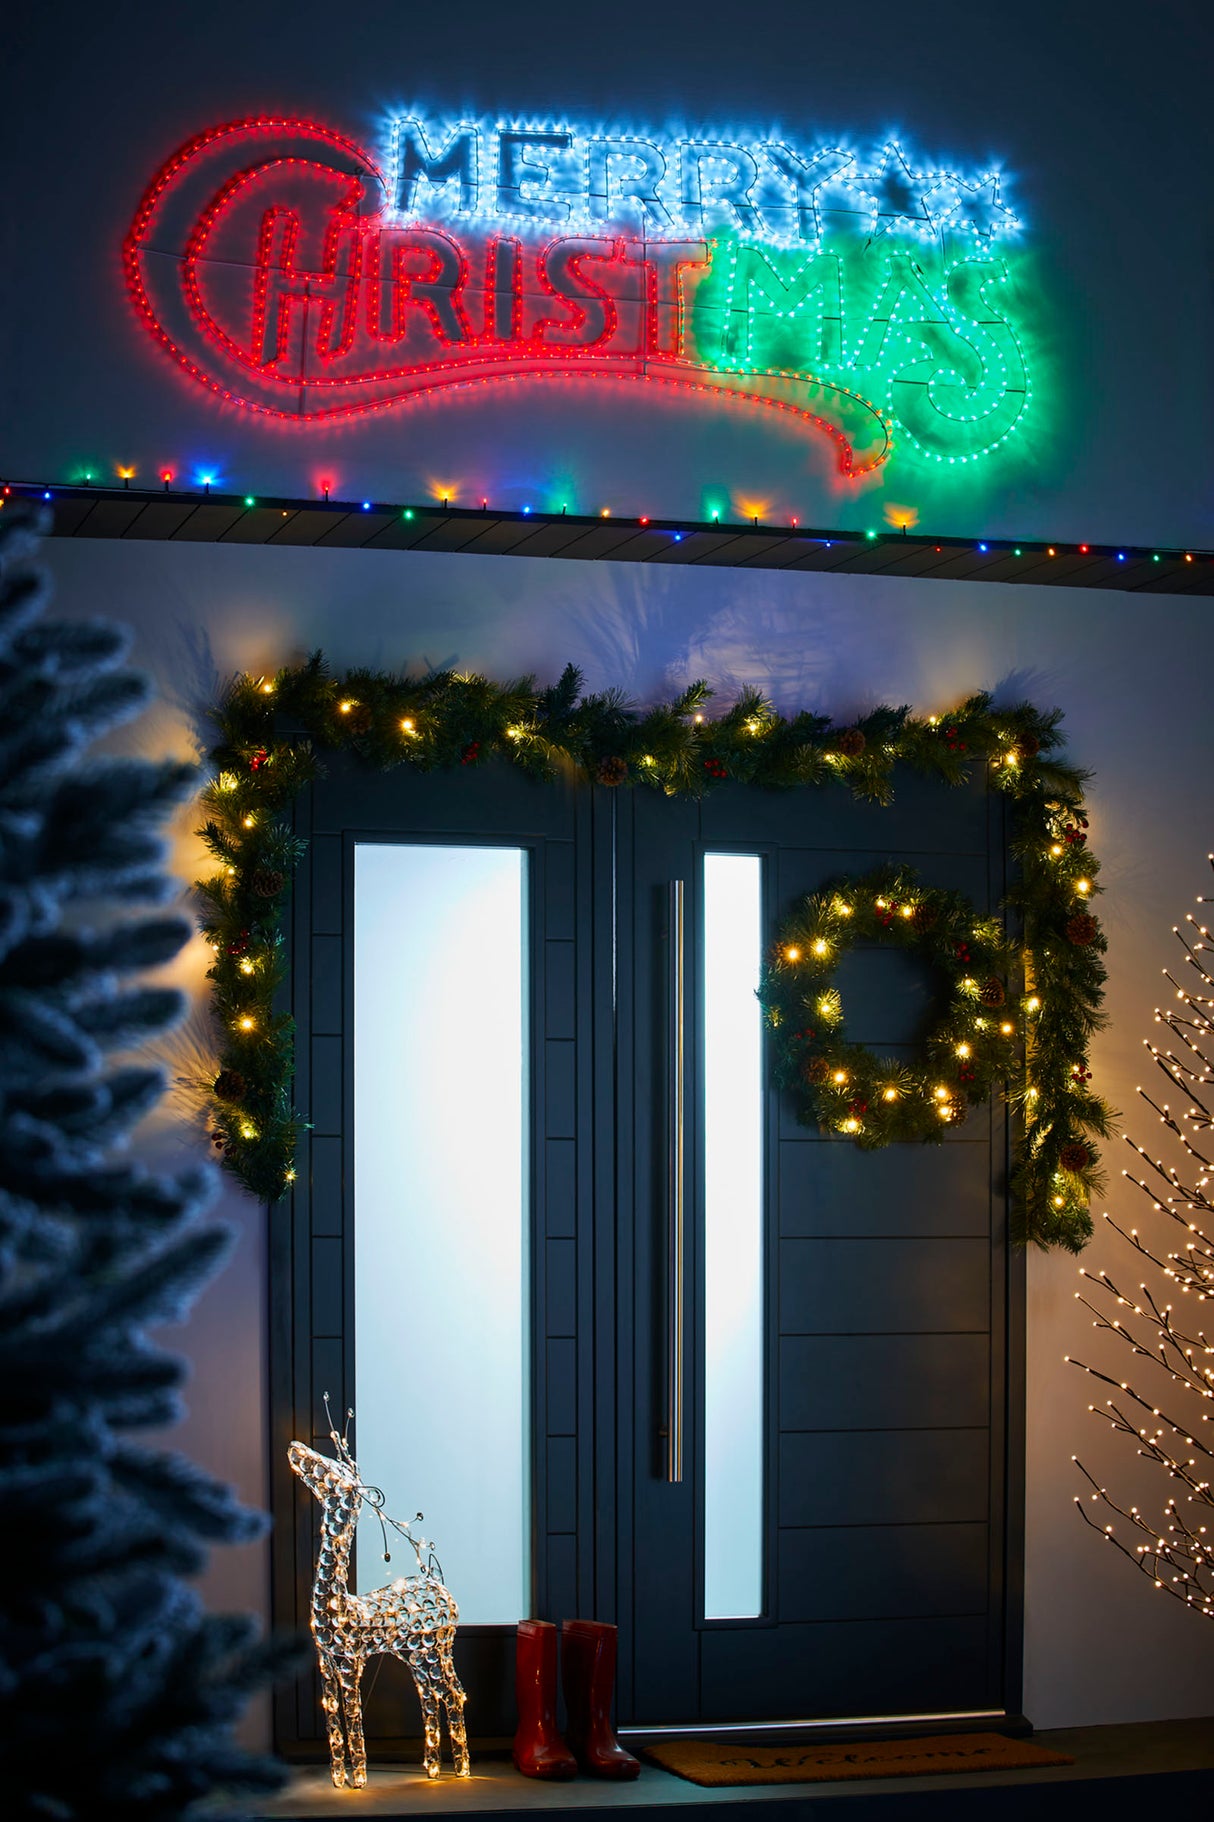 Animated Merry Christmas Rope Light Silhouette, 185 cm